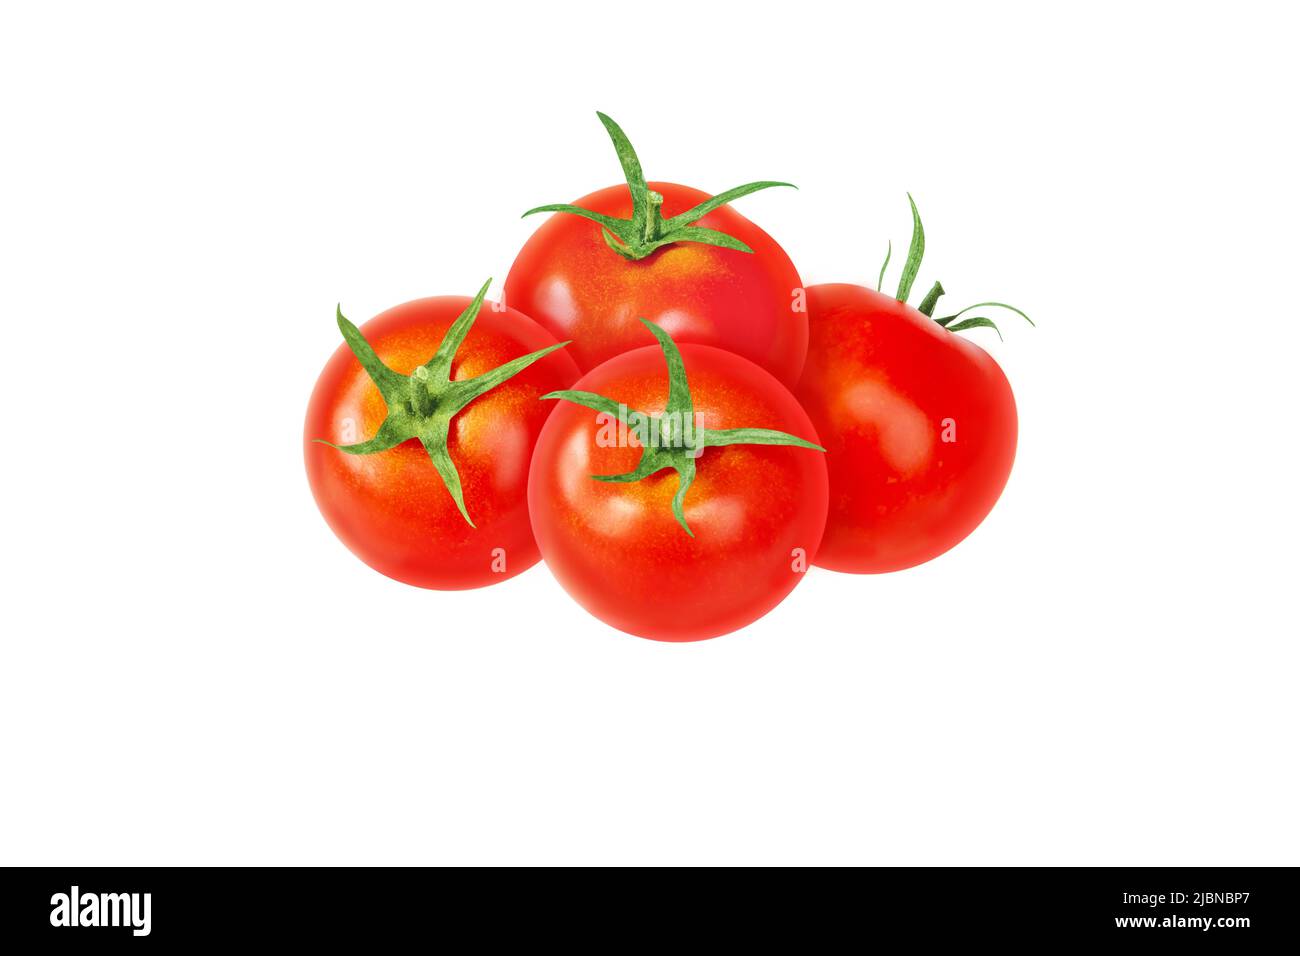 Tomato red vegetables heap isolated on white background. Solanum lycopersicum ripe fruit. Stock Photo